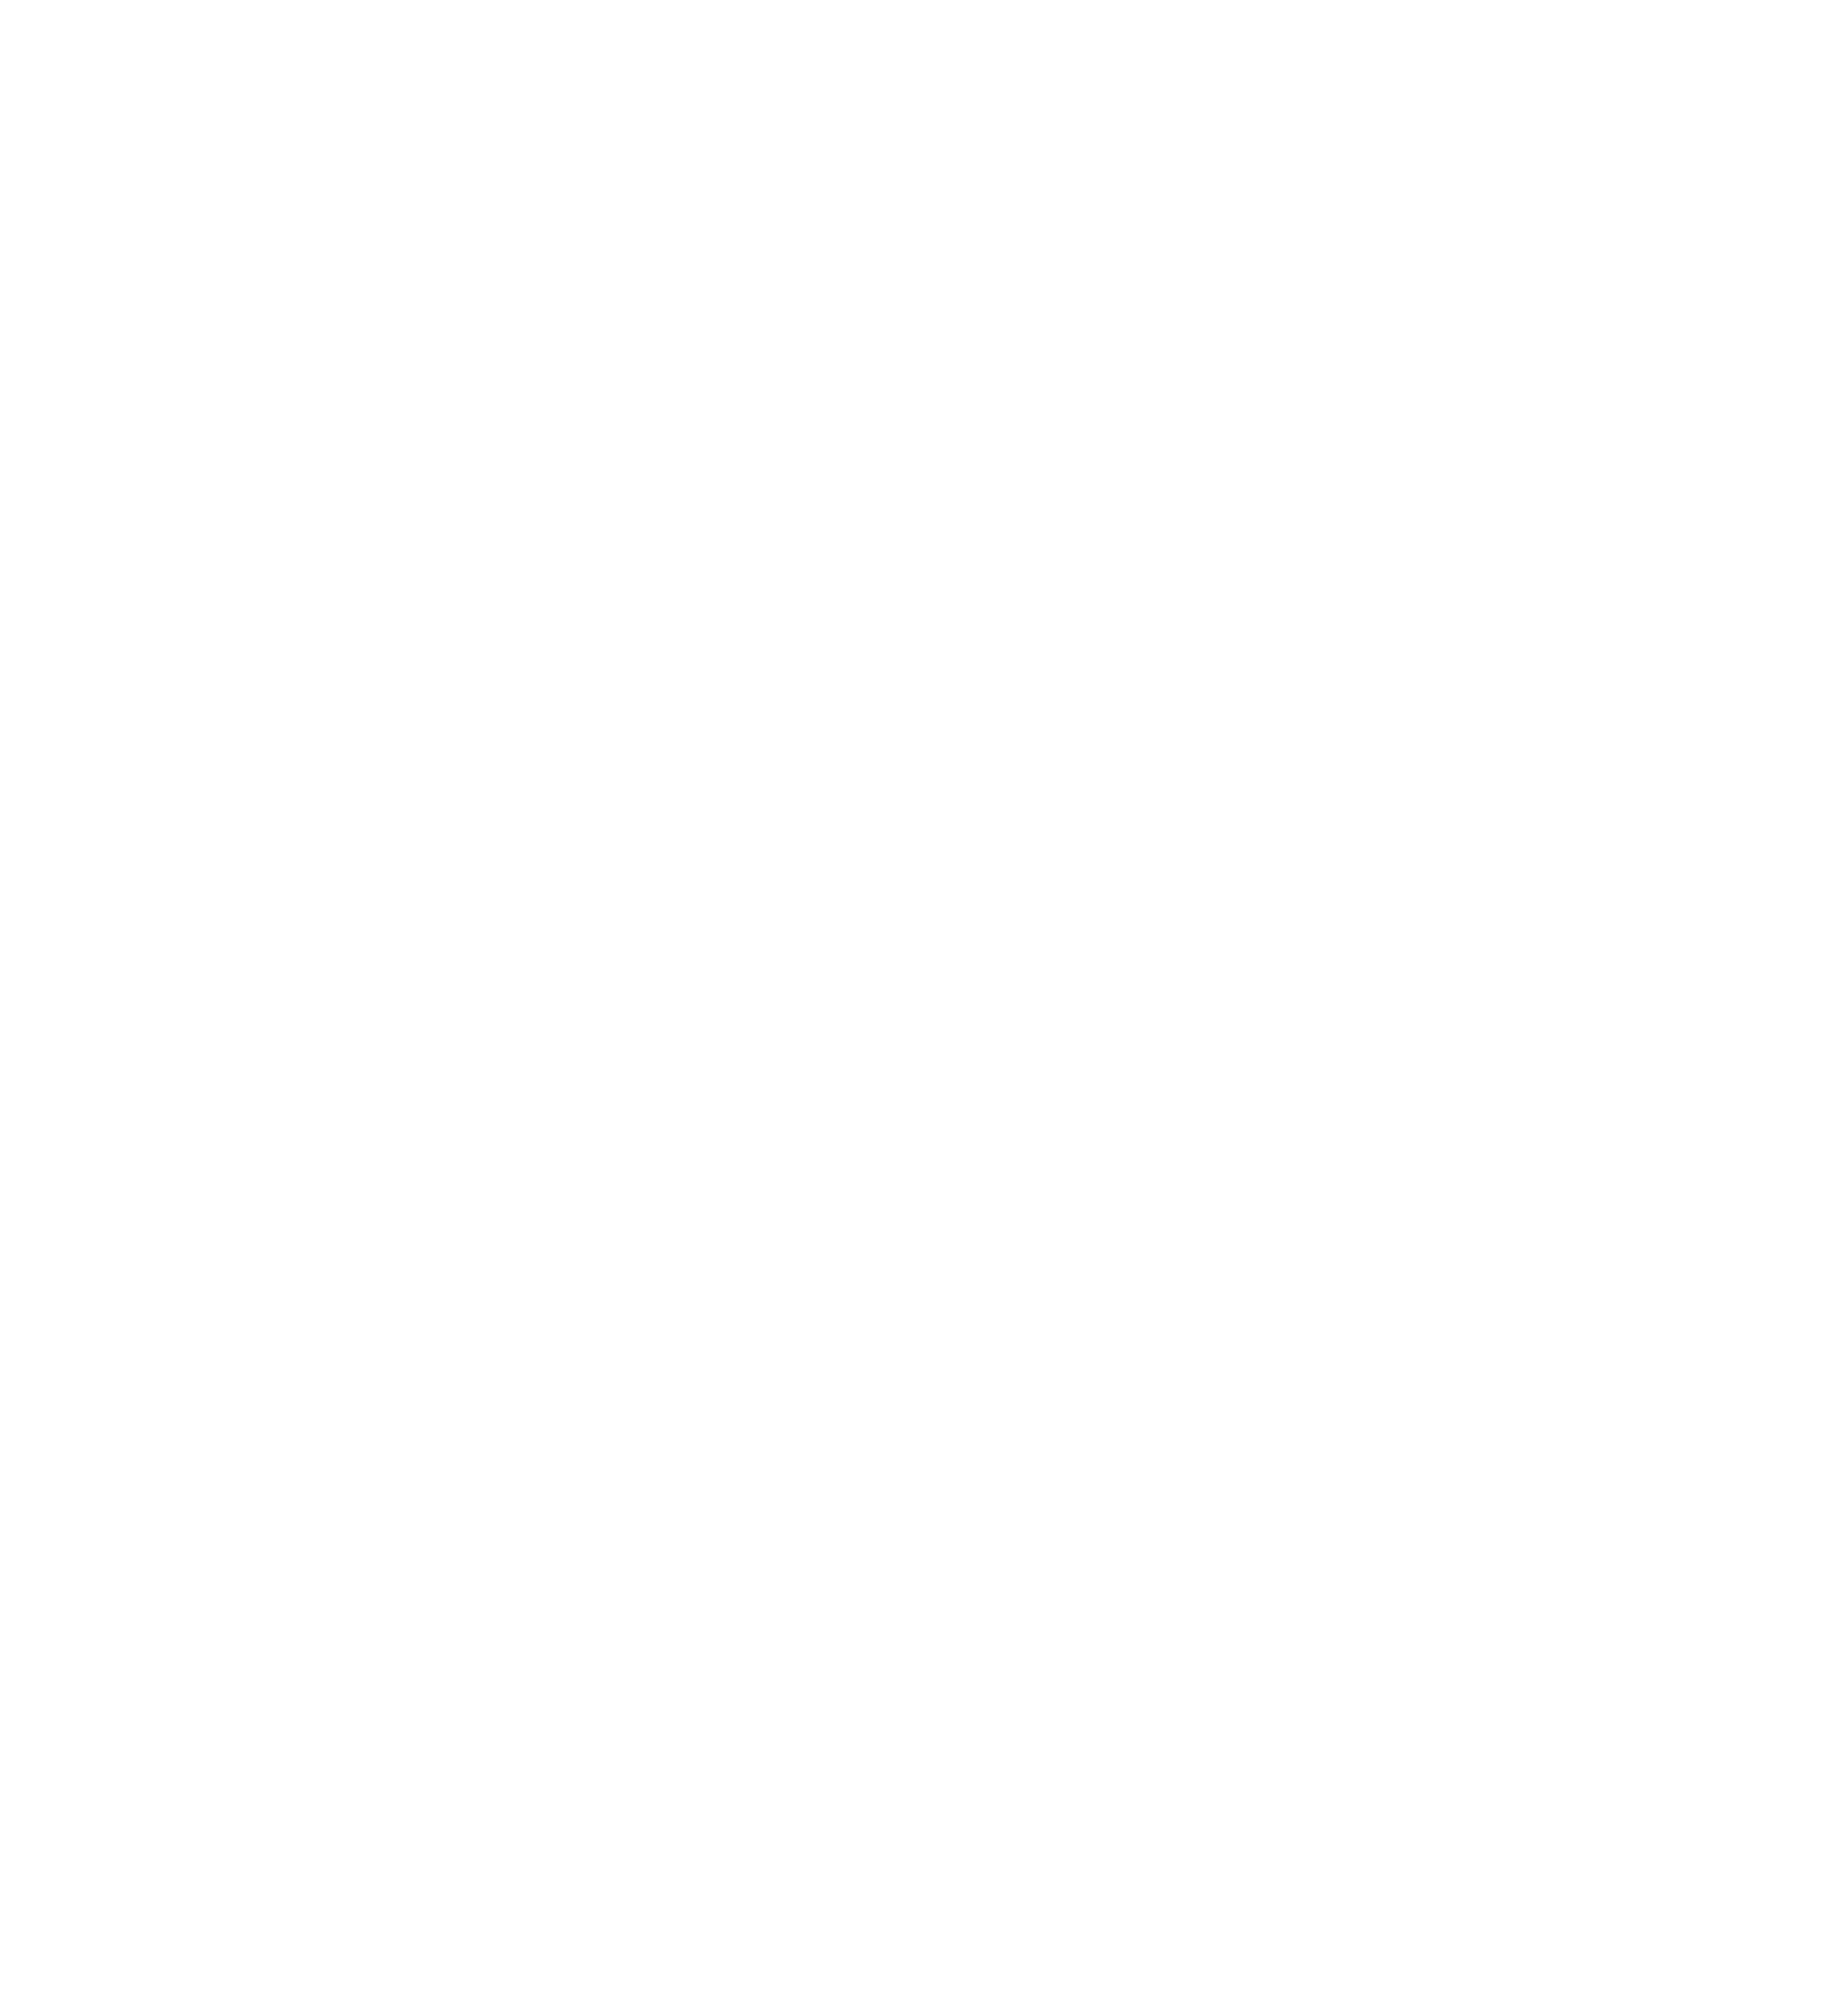 Piedmont Dumpster logo - white